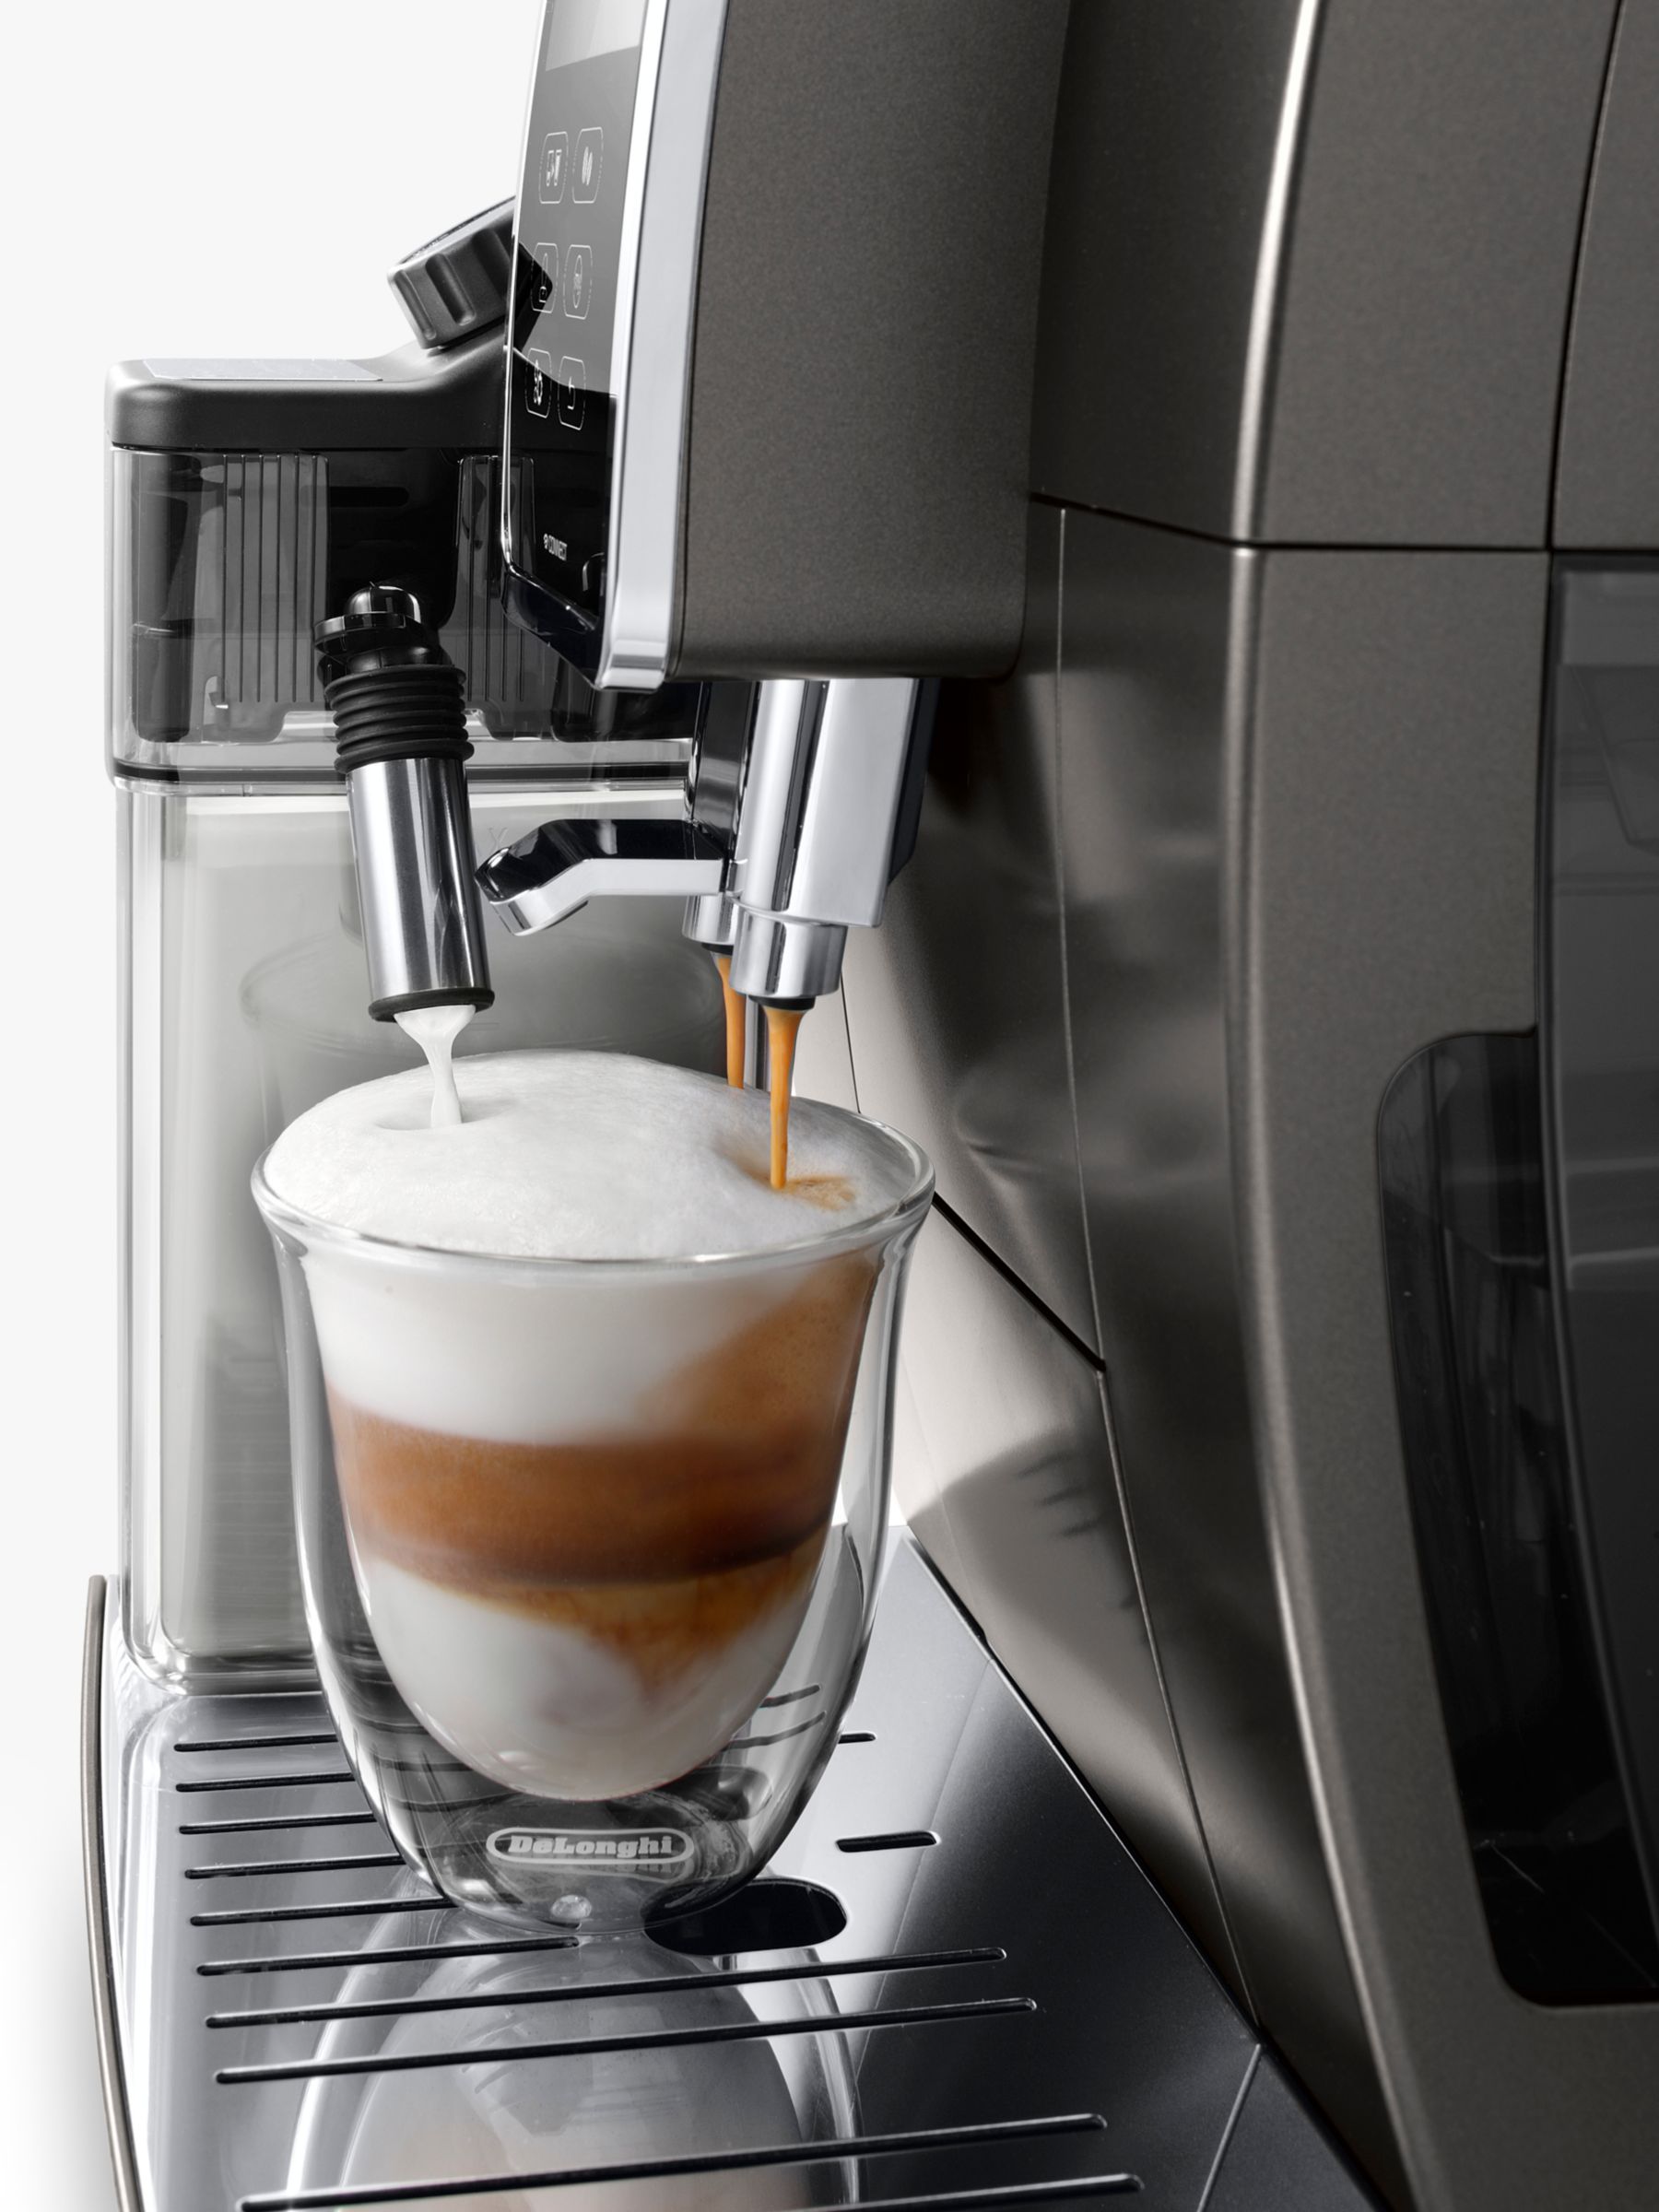 De'Longhi Dinamica automatic espresso machine review